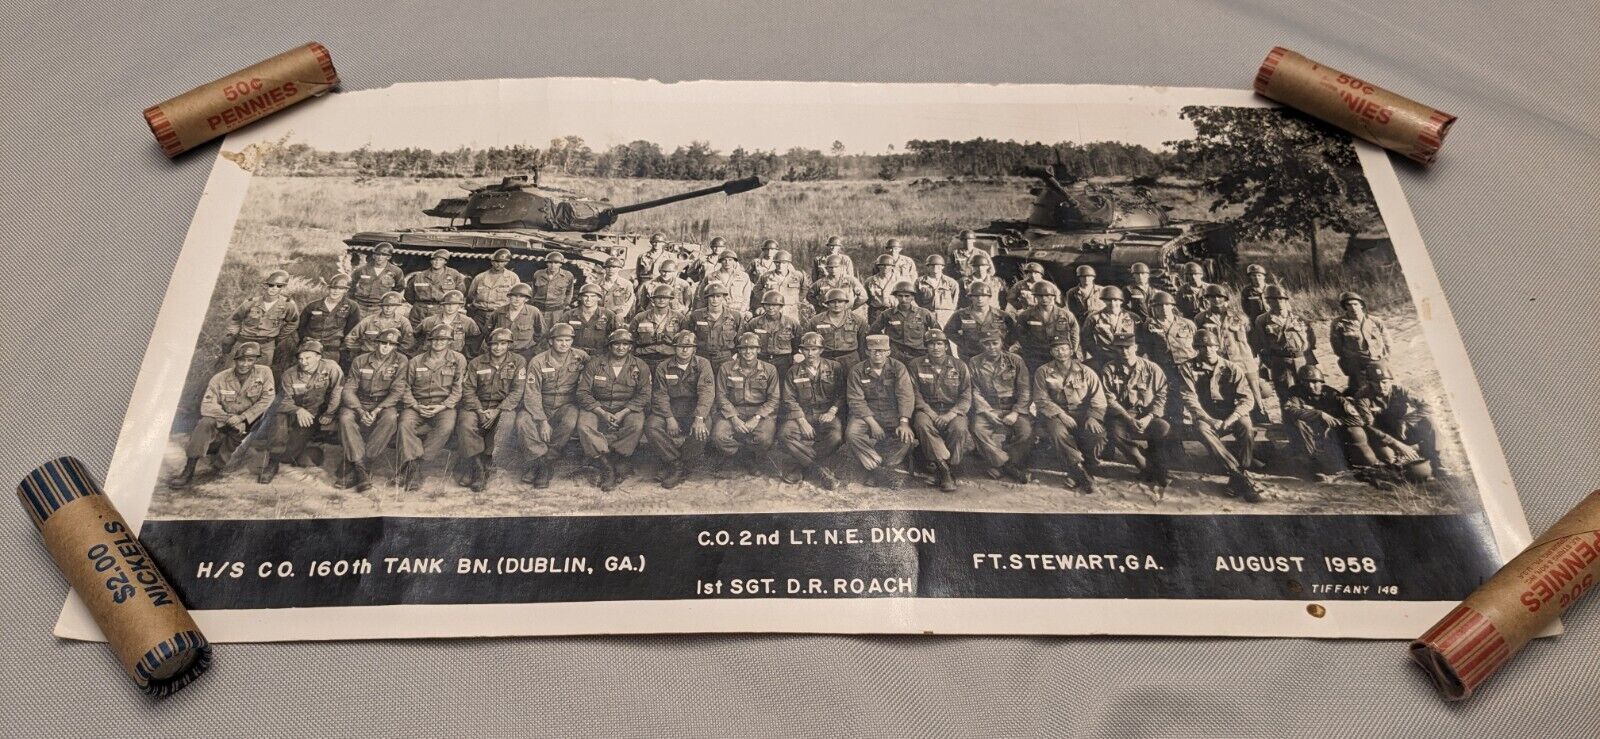 Panoramic Military Photo - 160th Tank Battalion - Dublin Fort Stewart GA - 1958